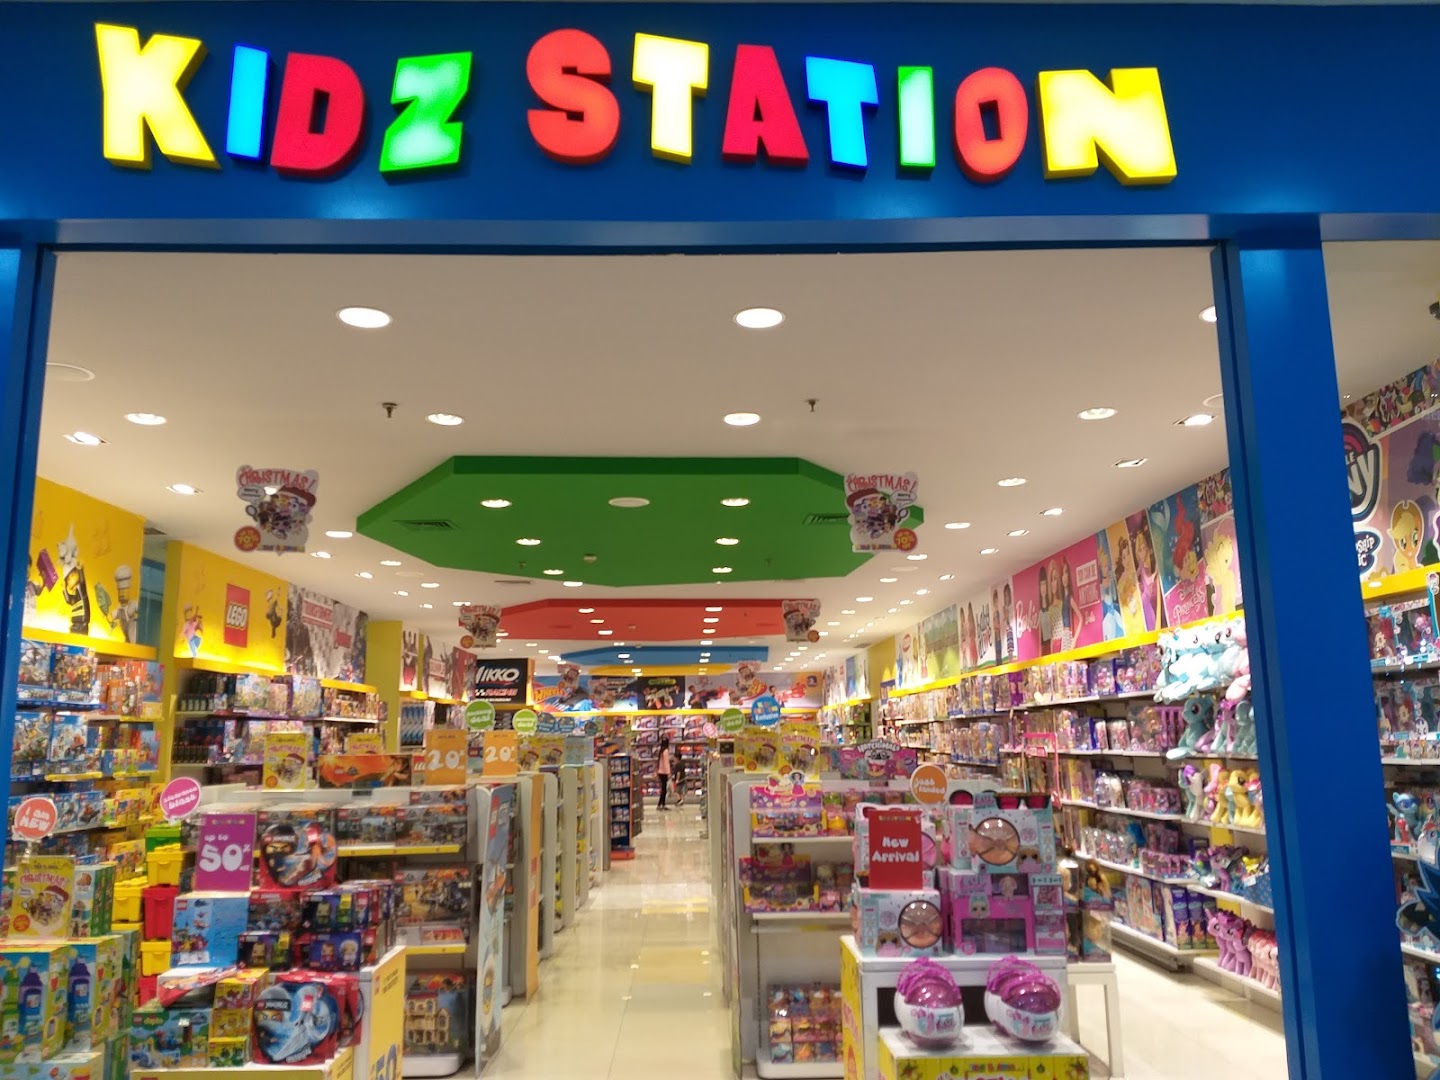 Gambar Kidz Station Ambarrukmo Plaza